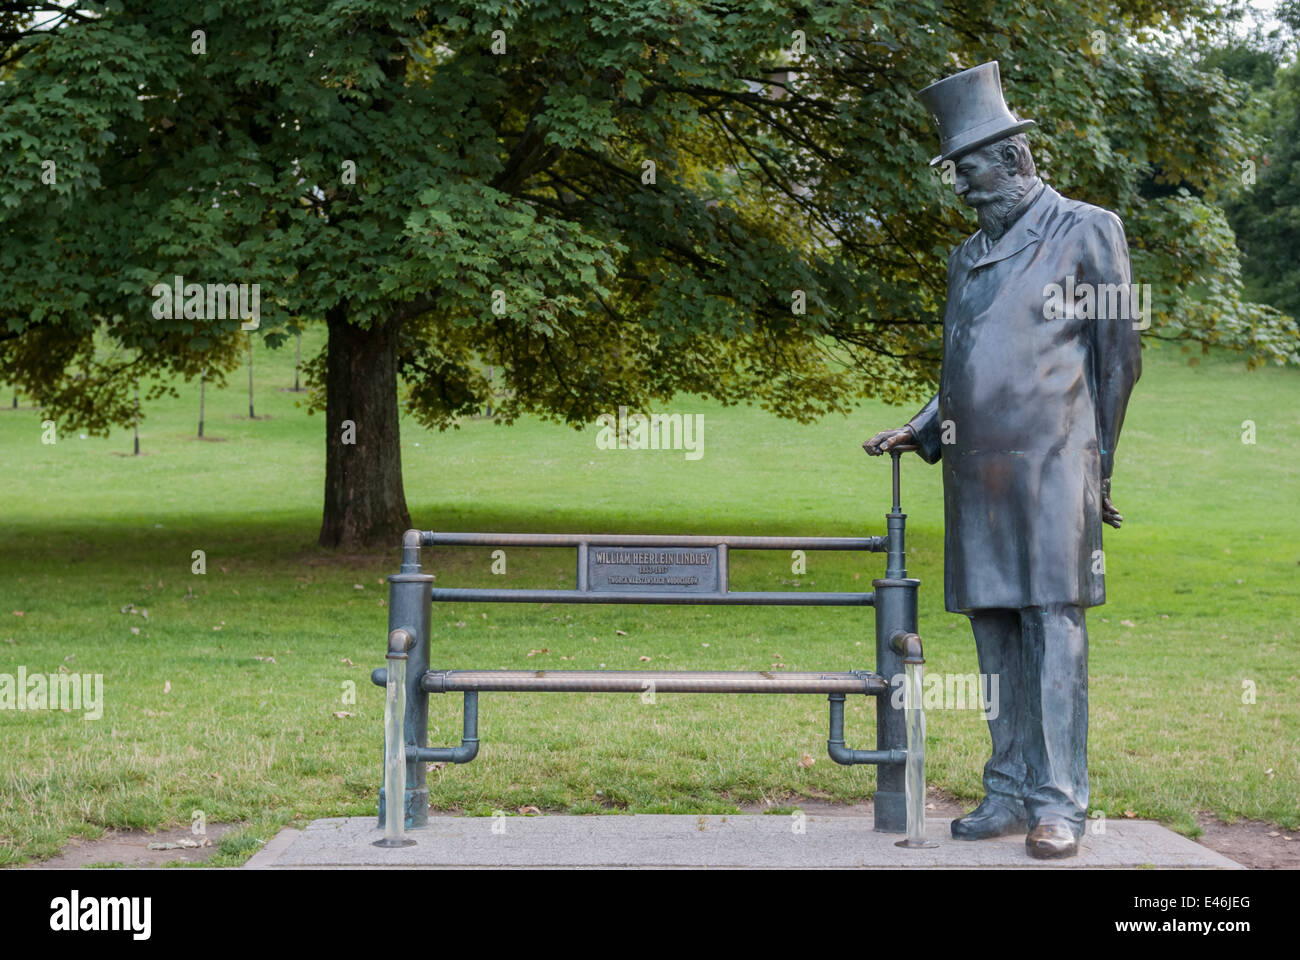 Statua e panca di William Heerlein Lindley, Varsavia, Polonia Foto Stock